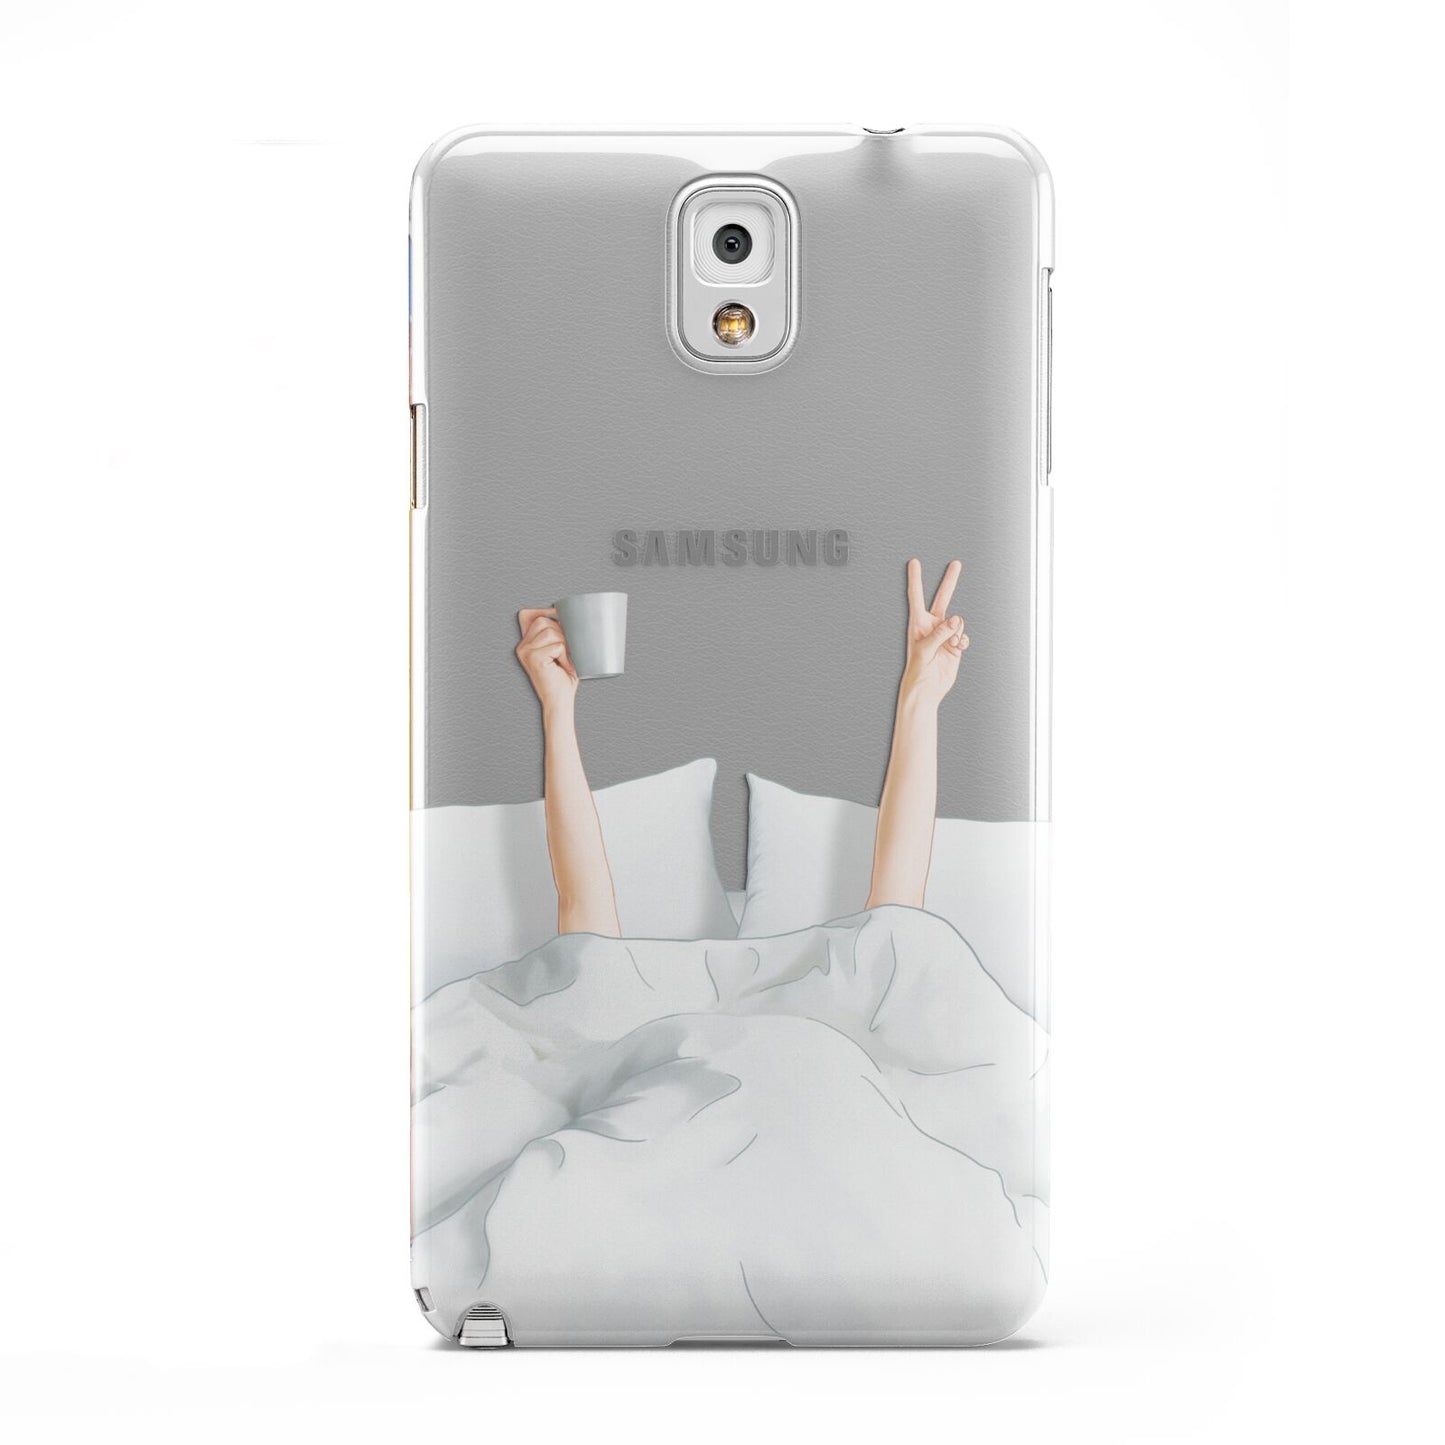 Morning Coffee Samsung Galaxy Note 3 Case